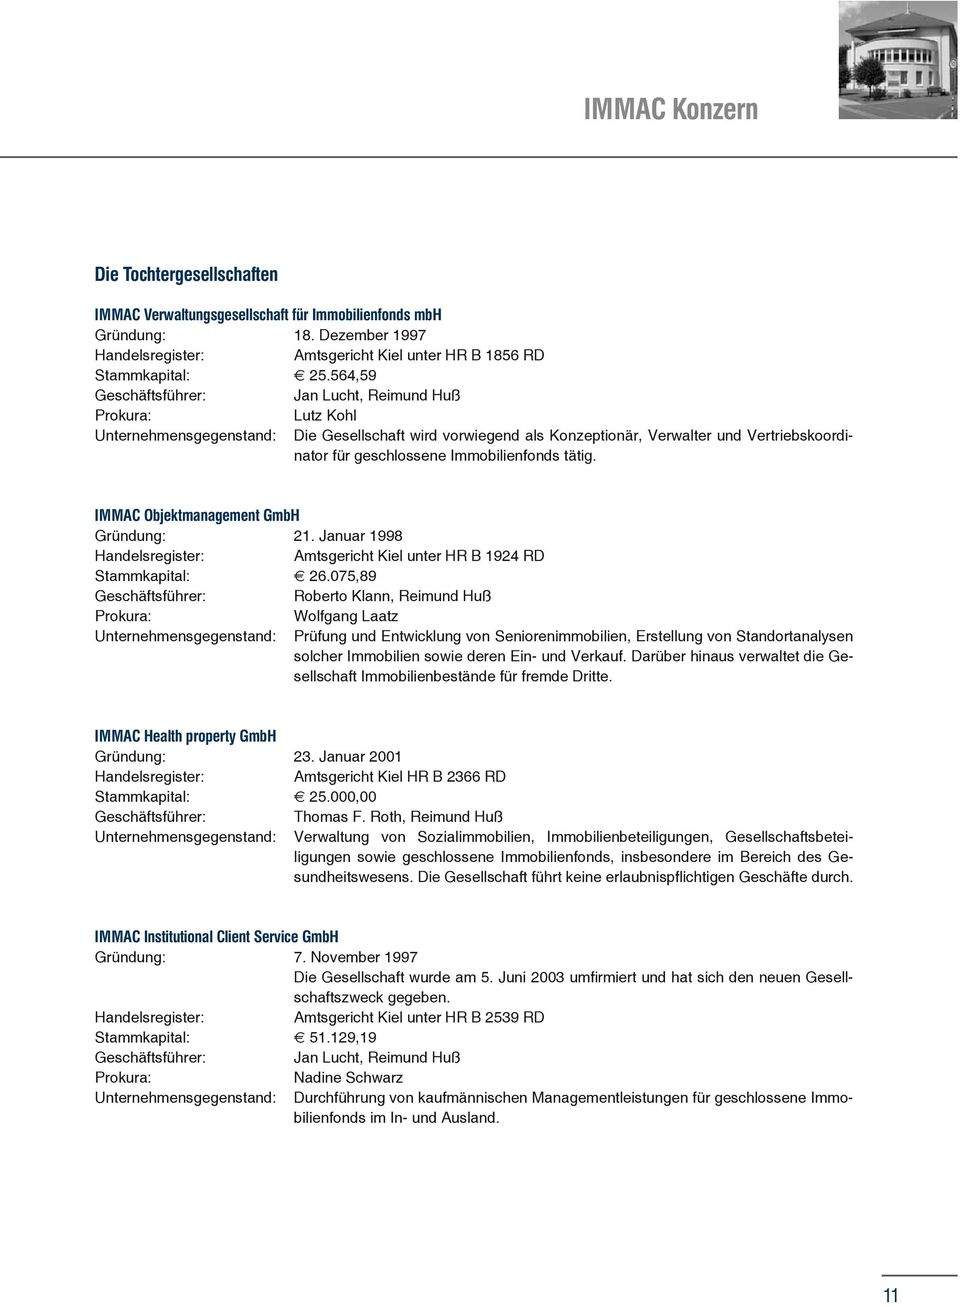 Immobilienfonds tätig. IMMAC Objektmanagement GmbH Gründung: 21. Januar 1998 Handelsregister: Amtsgericht Kiel unter HR B 1924 RD Stammkapital: E 26.